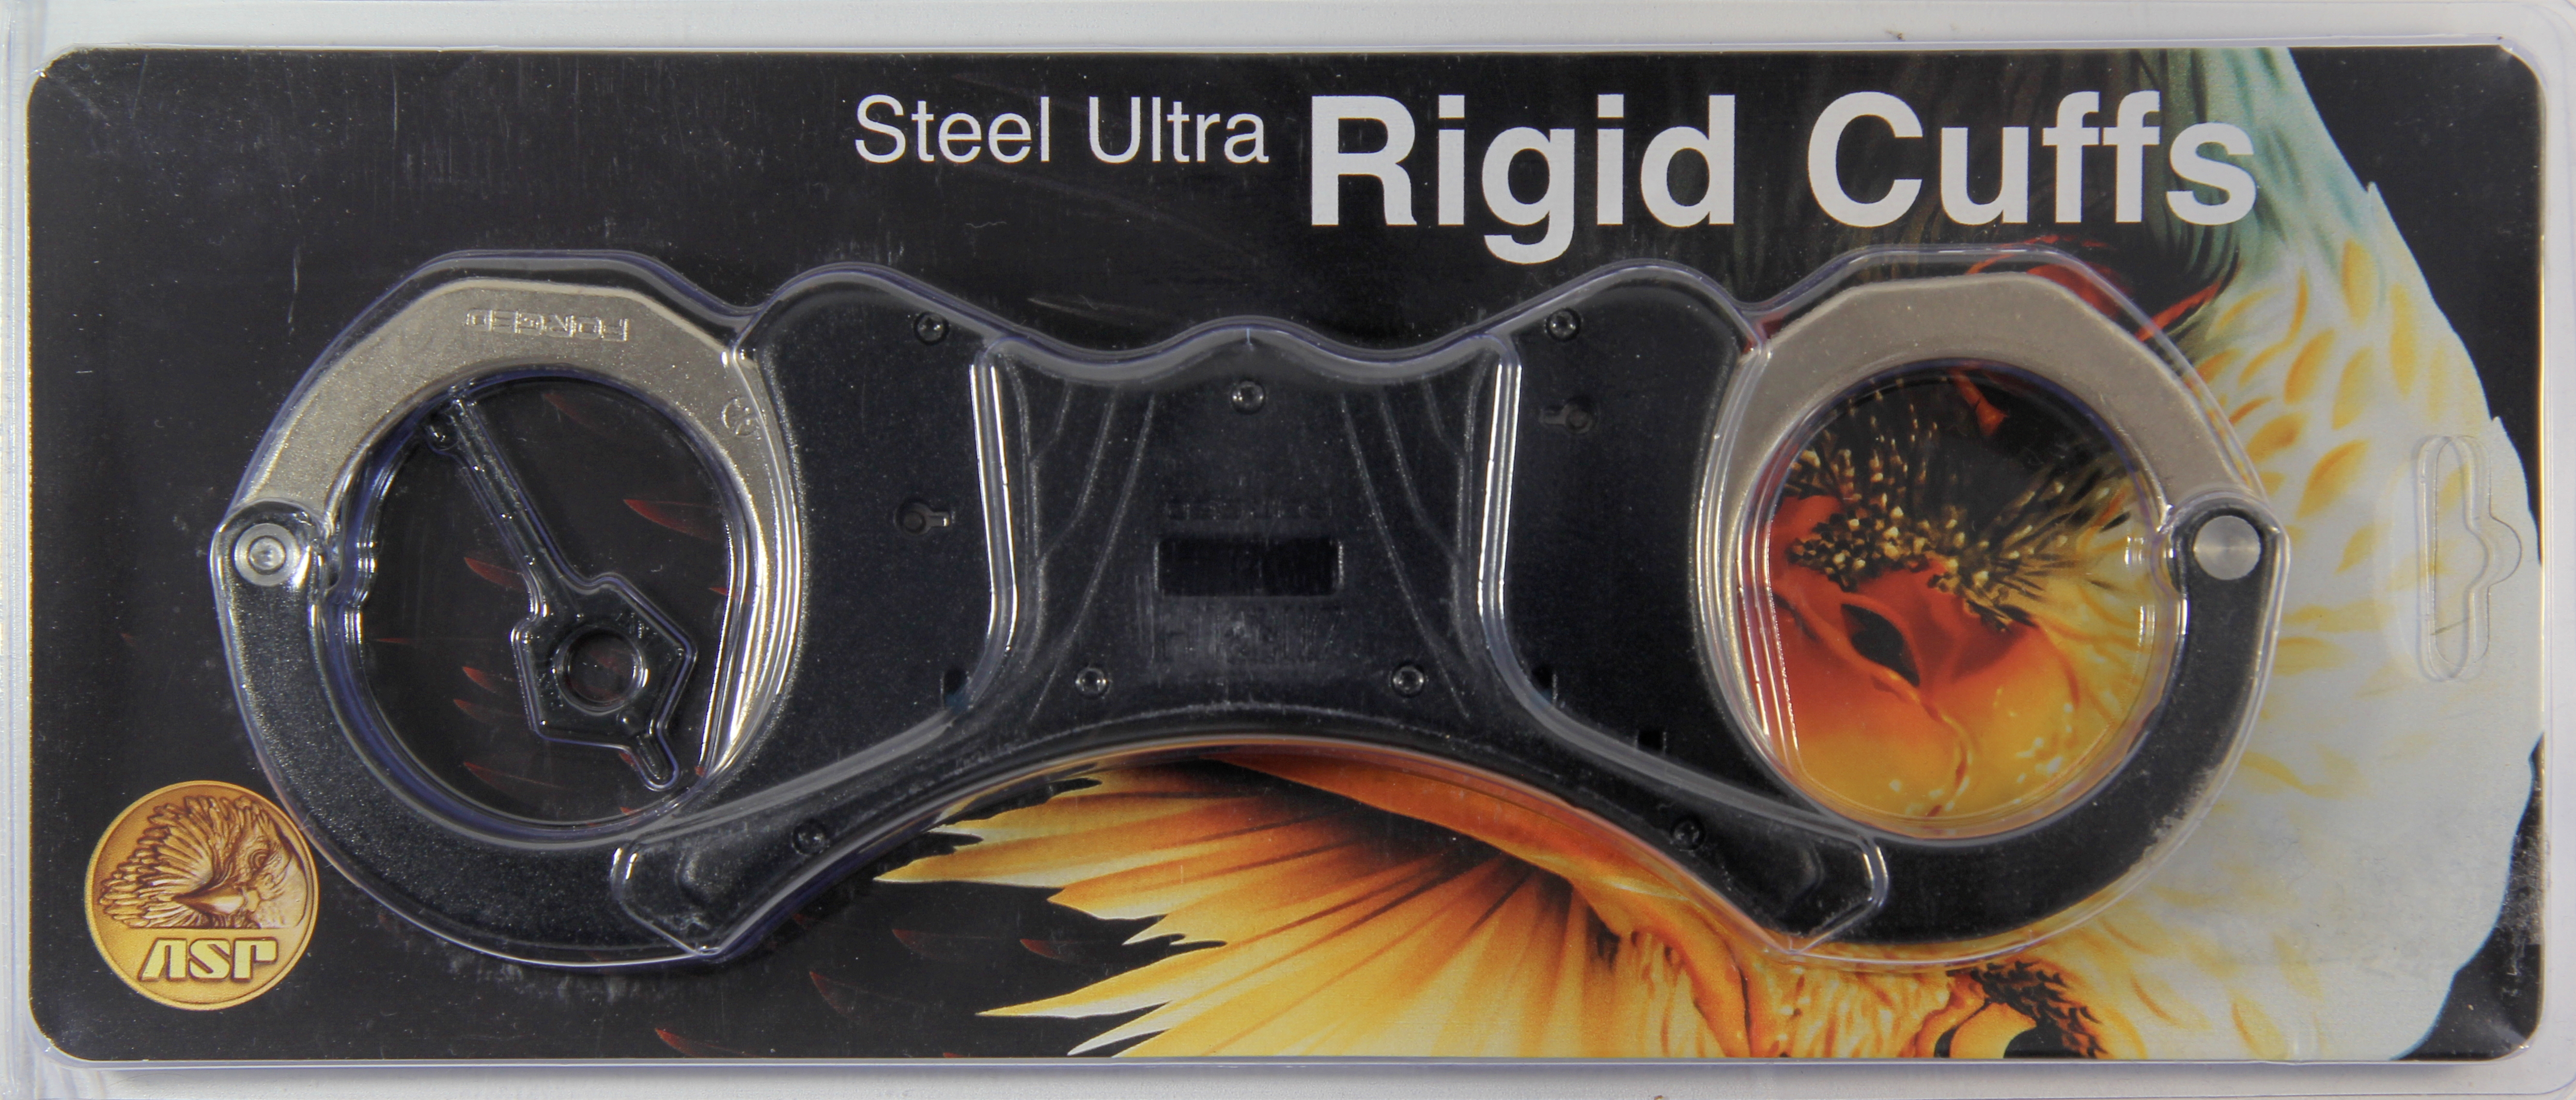 ASP Steel Rigid Ultra Cuffs (1 Pawl) - 56020 / Model 600